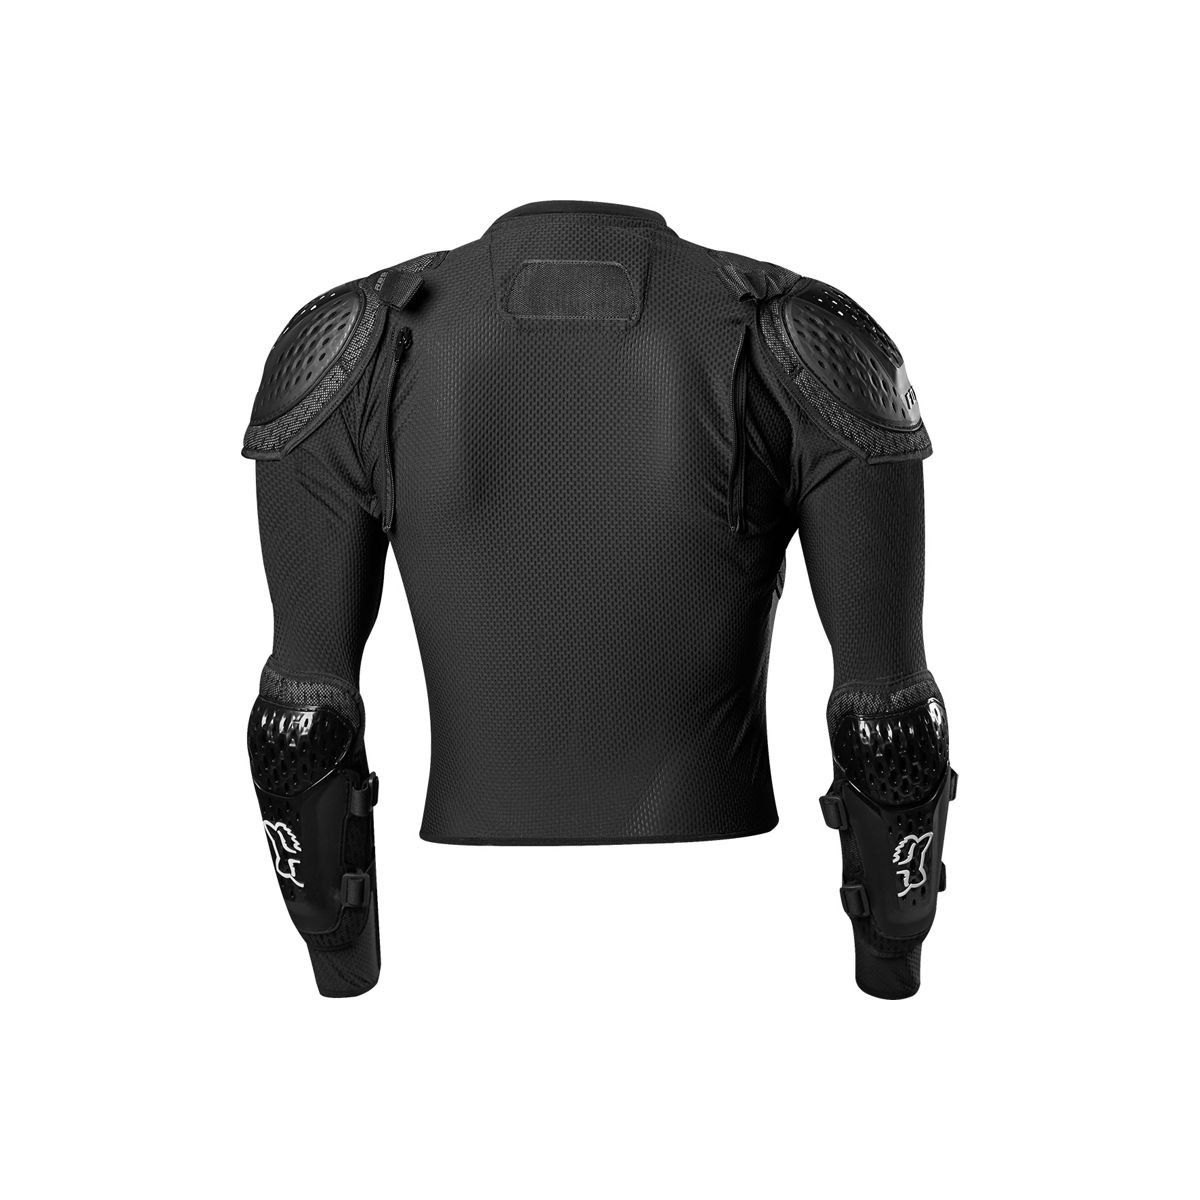 Protección de espalda Fox Titan niño color negro para Dh | Descenso | Enduro | Motocross